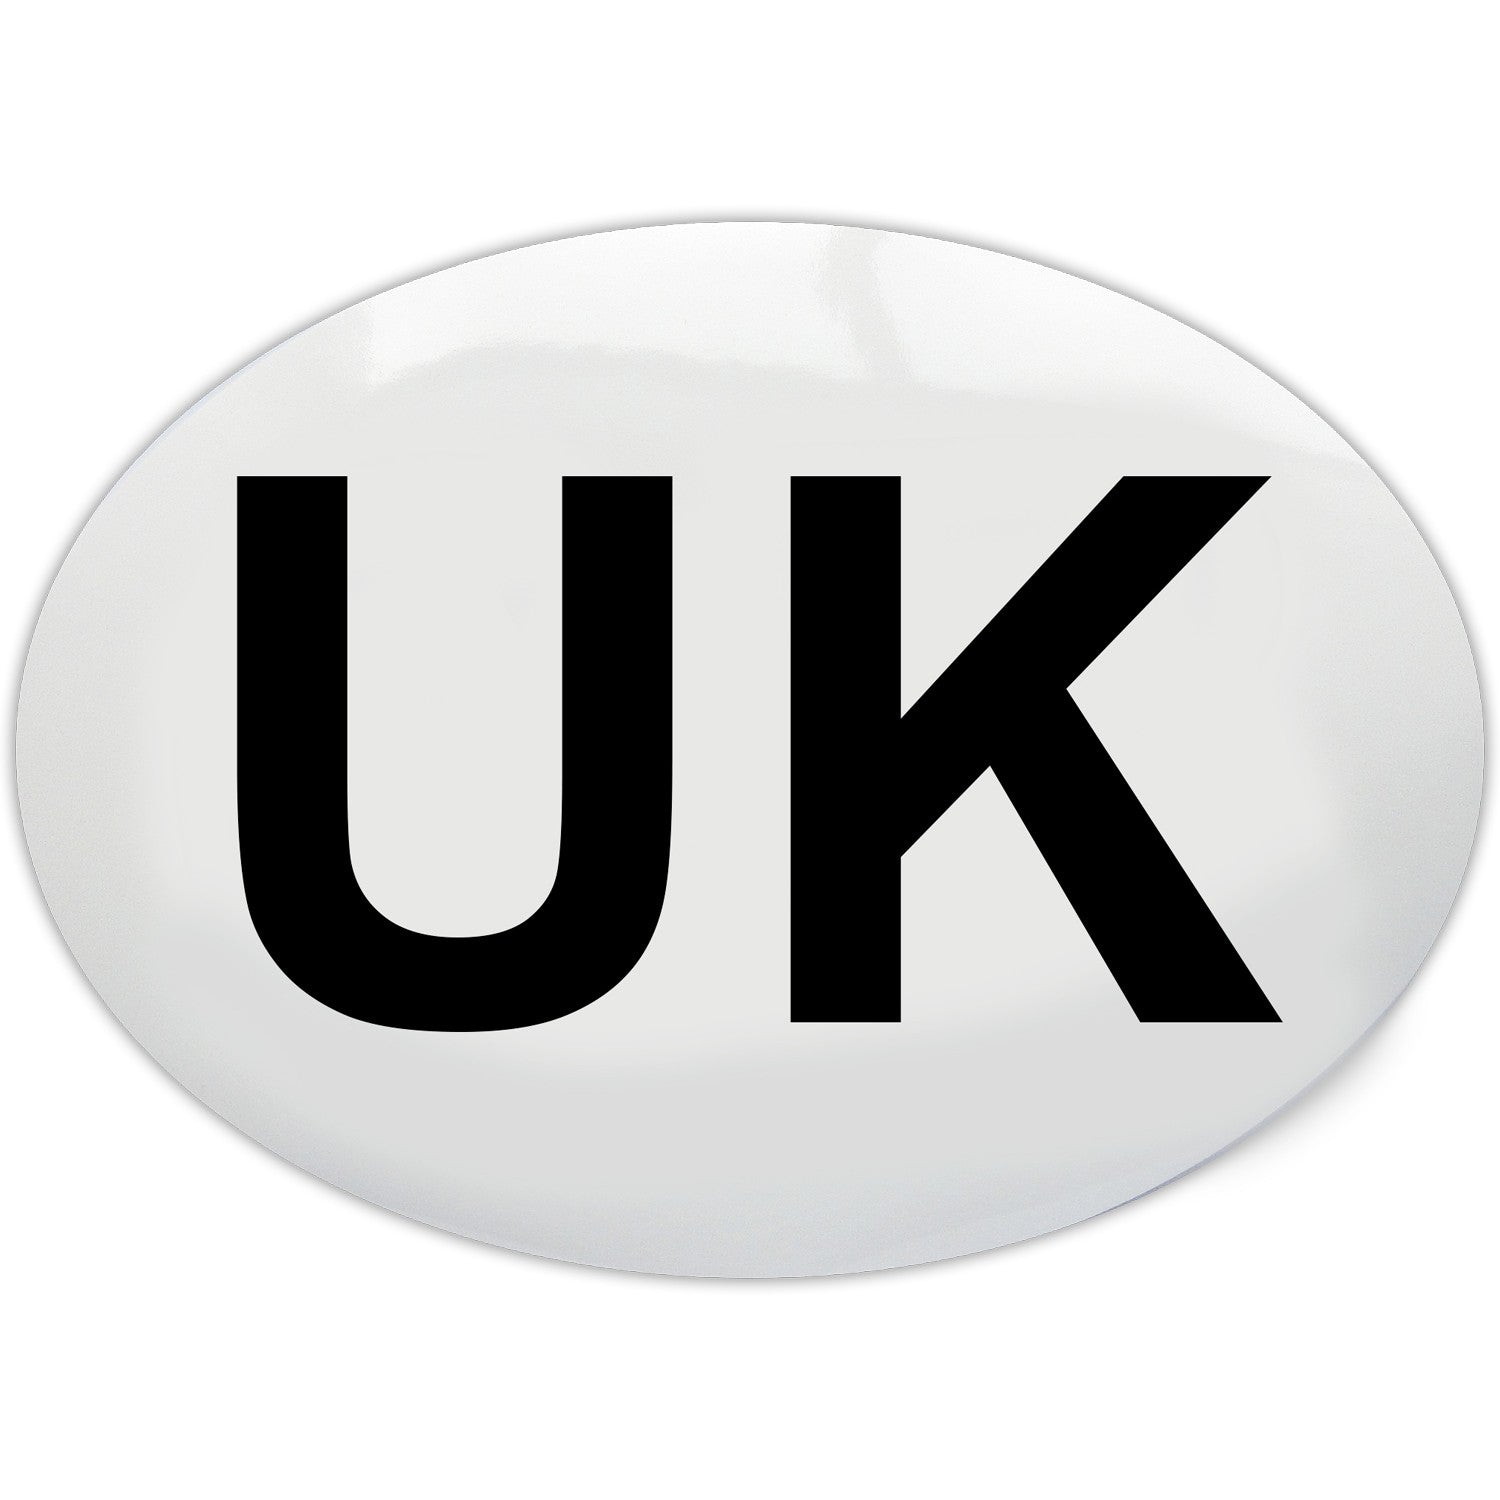 Simply Auto Oval UK Adhesive Sticker